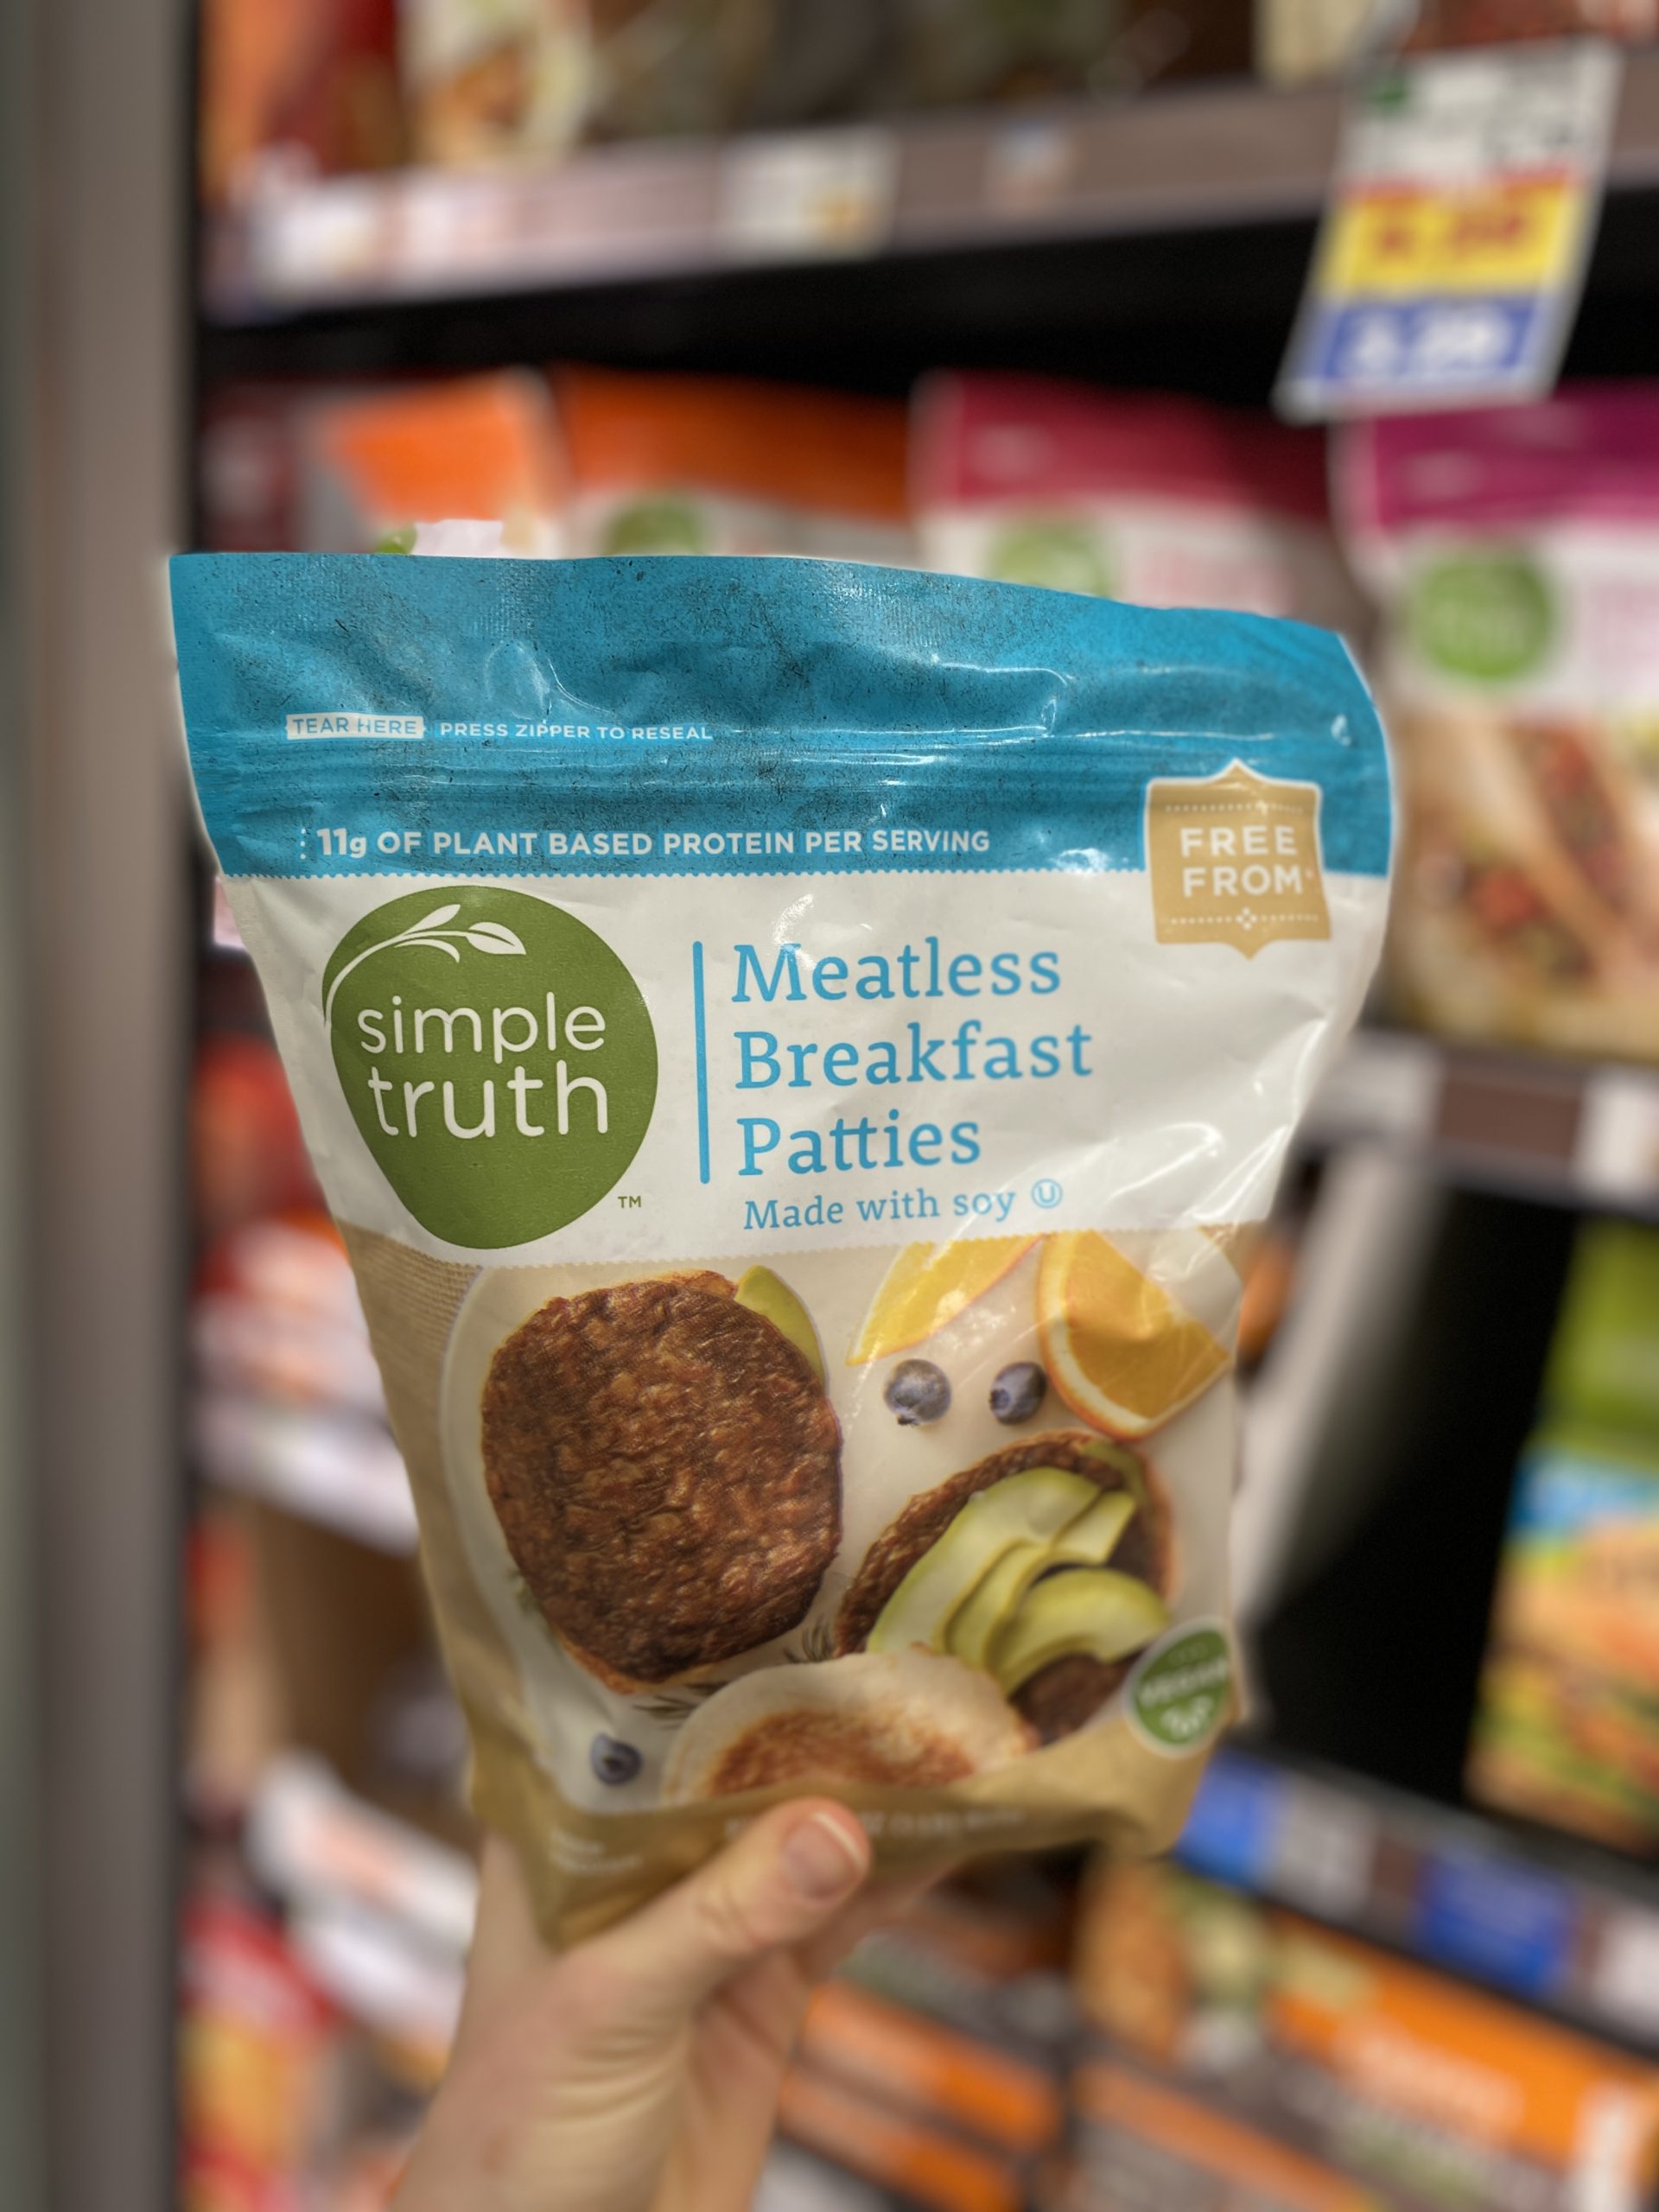 Person holding vegan meatless breakfast patties